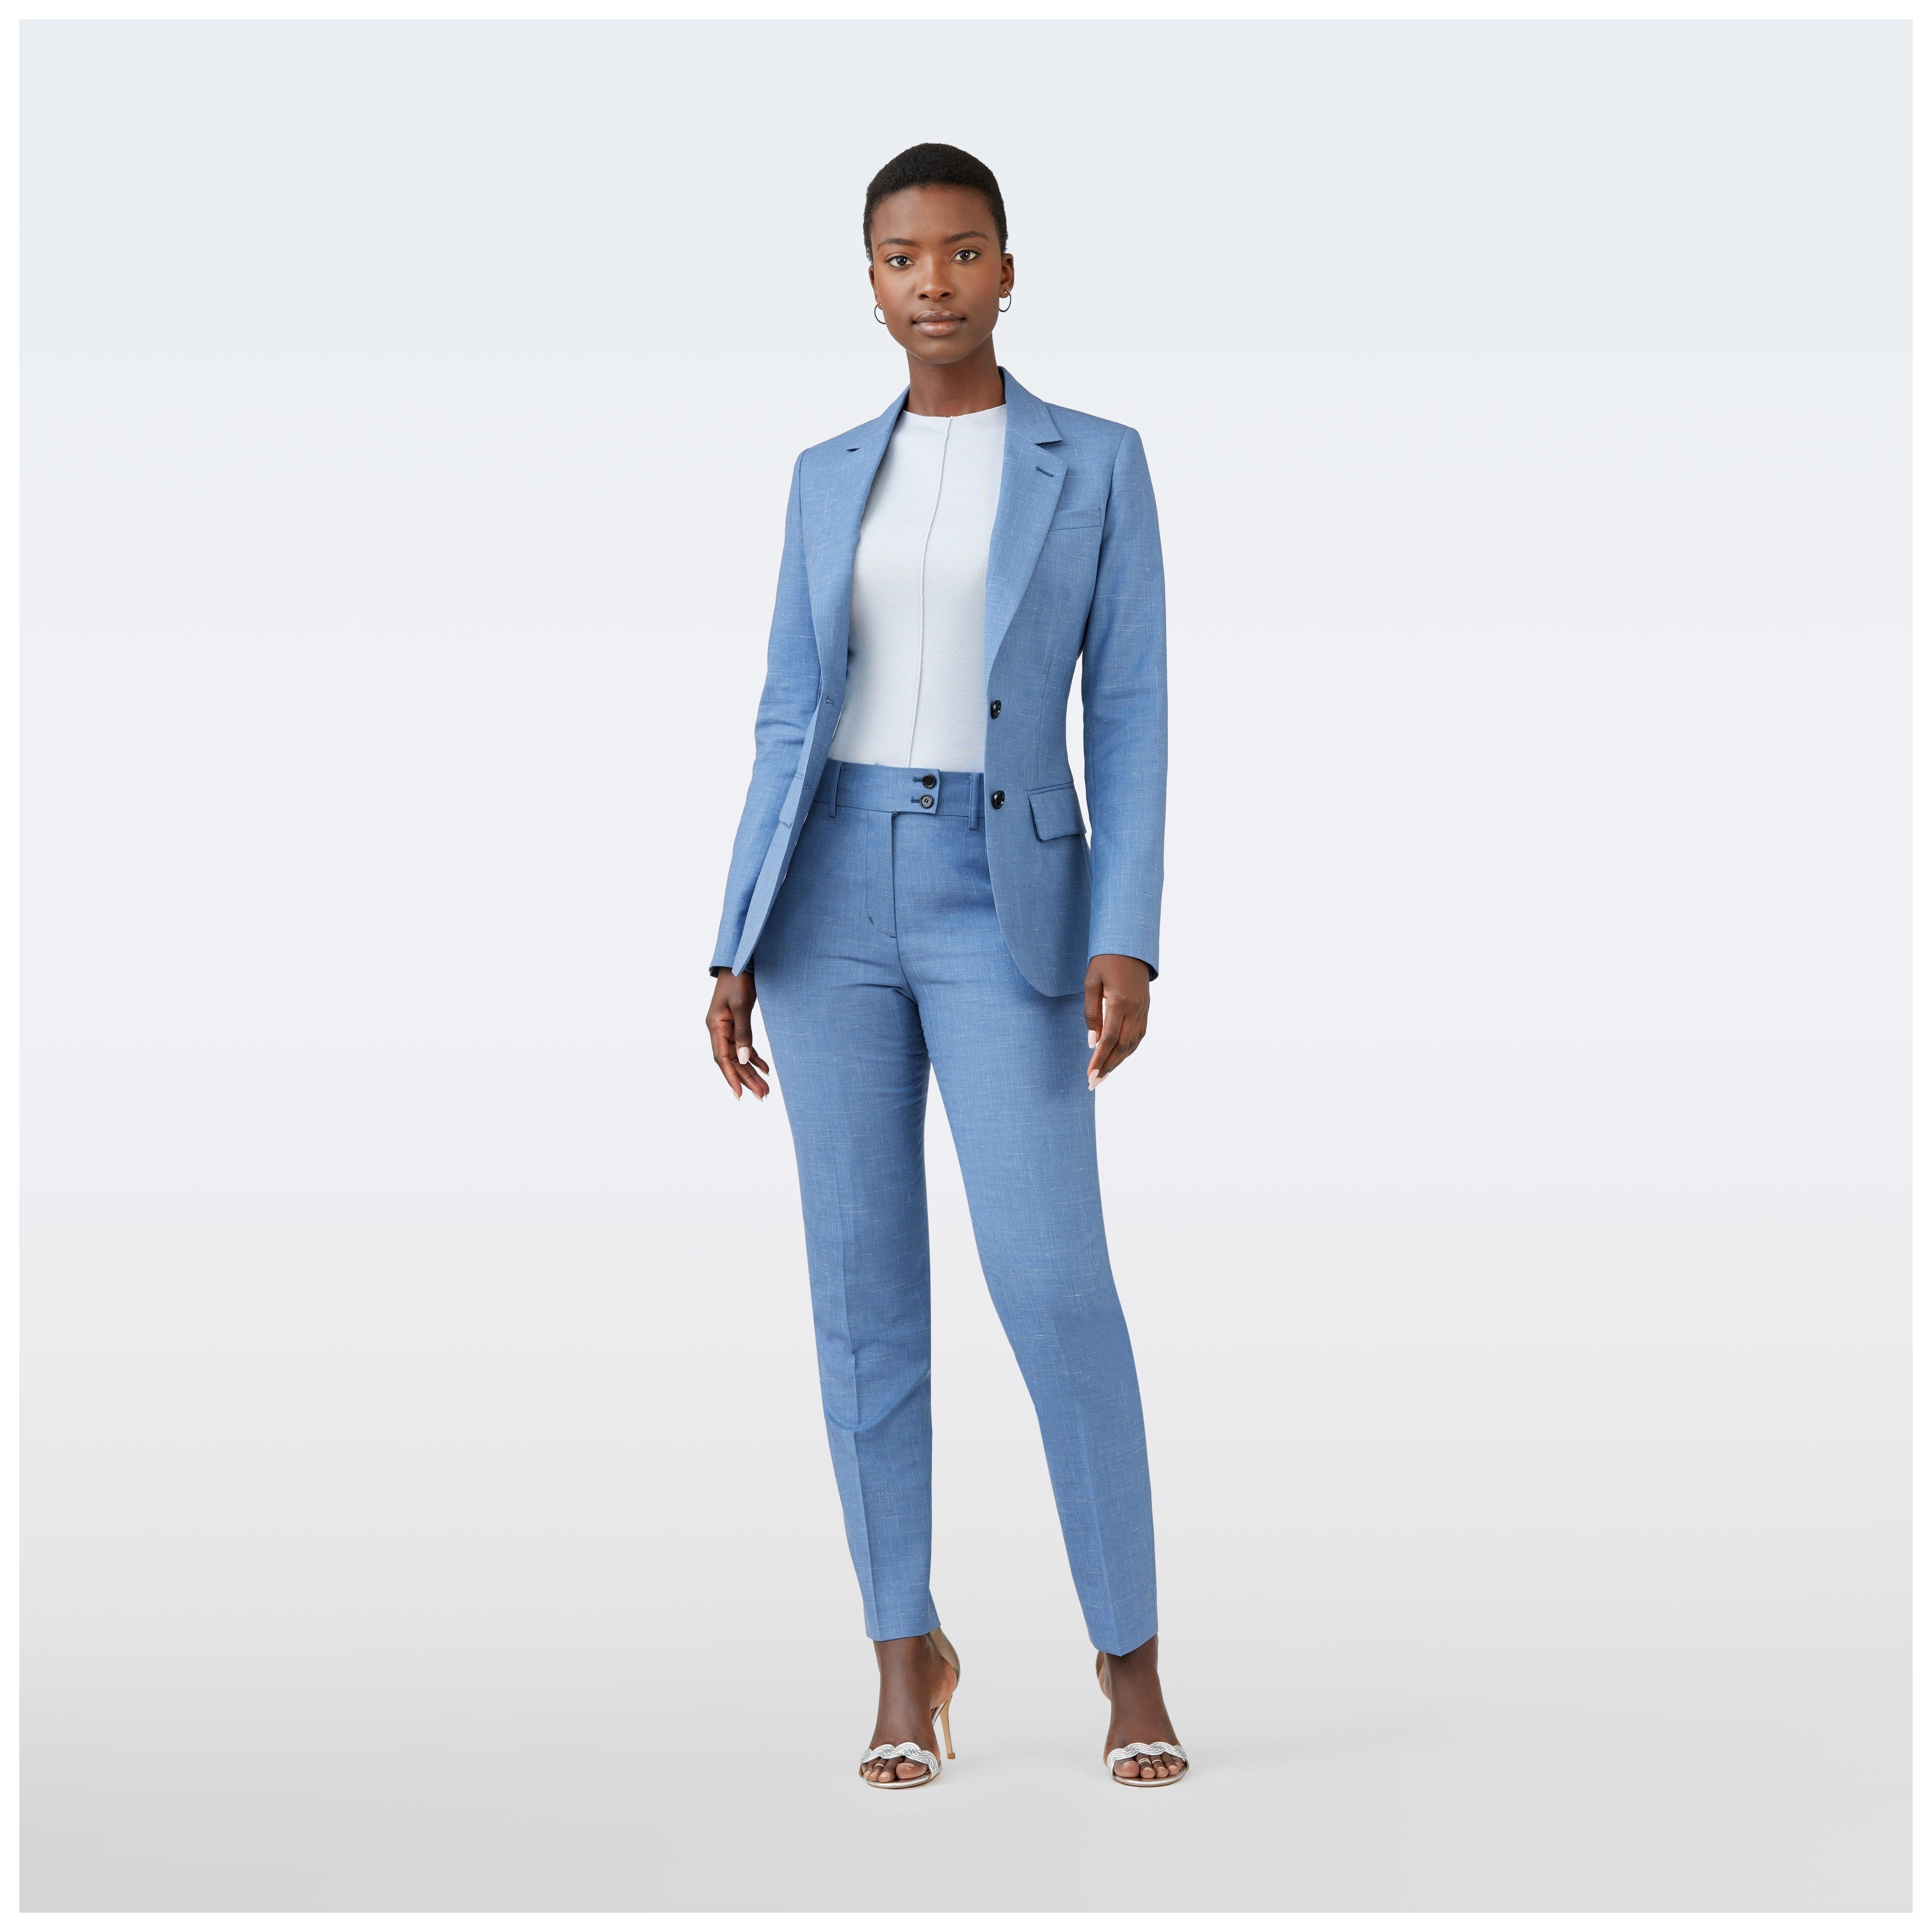 The Augusta Baby Blue Linen Blend Suit - Women's Custom Suit